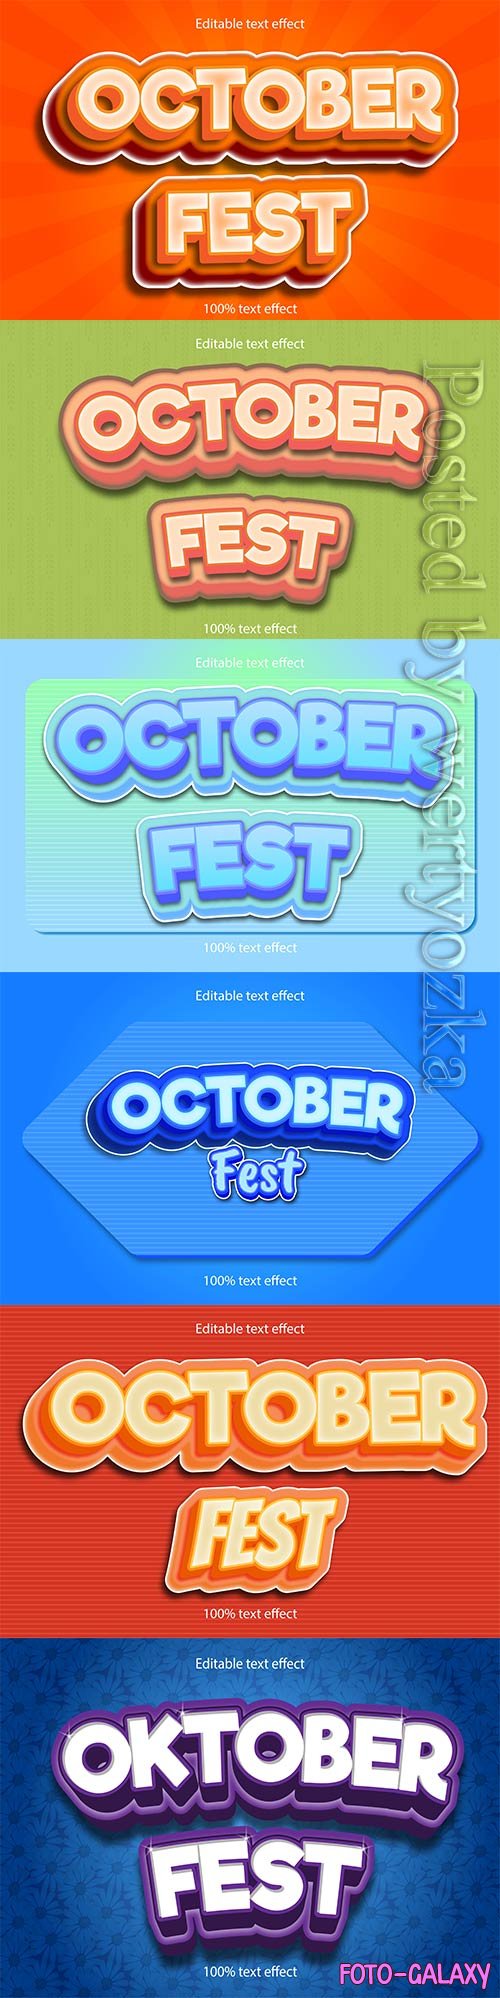 October fest editable text effect vol 5